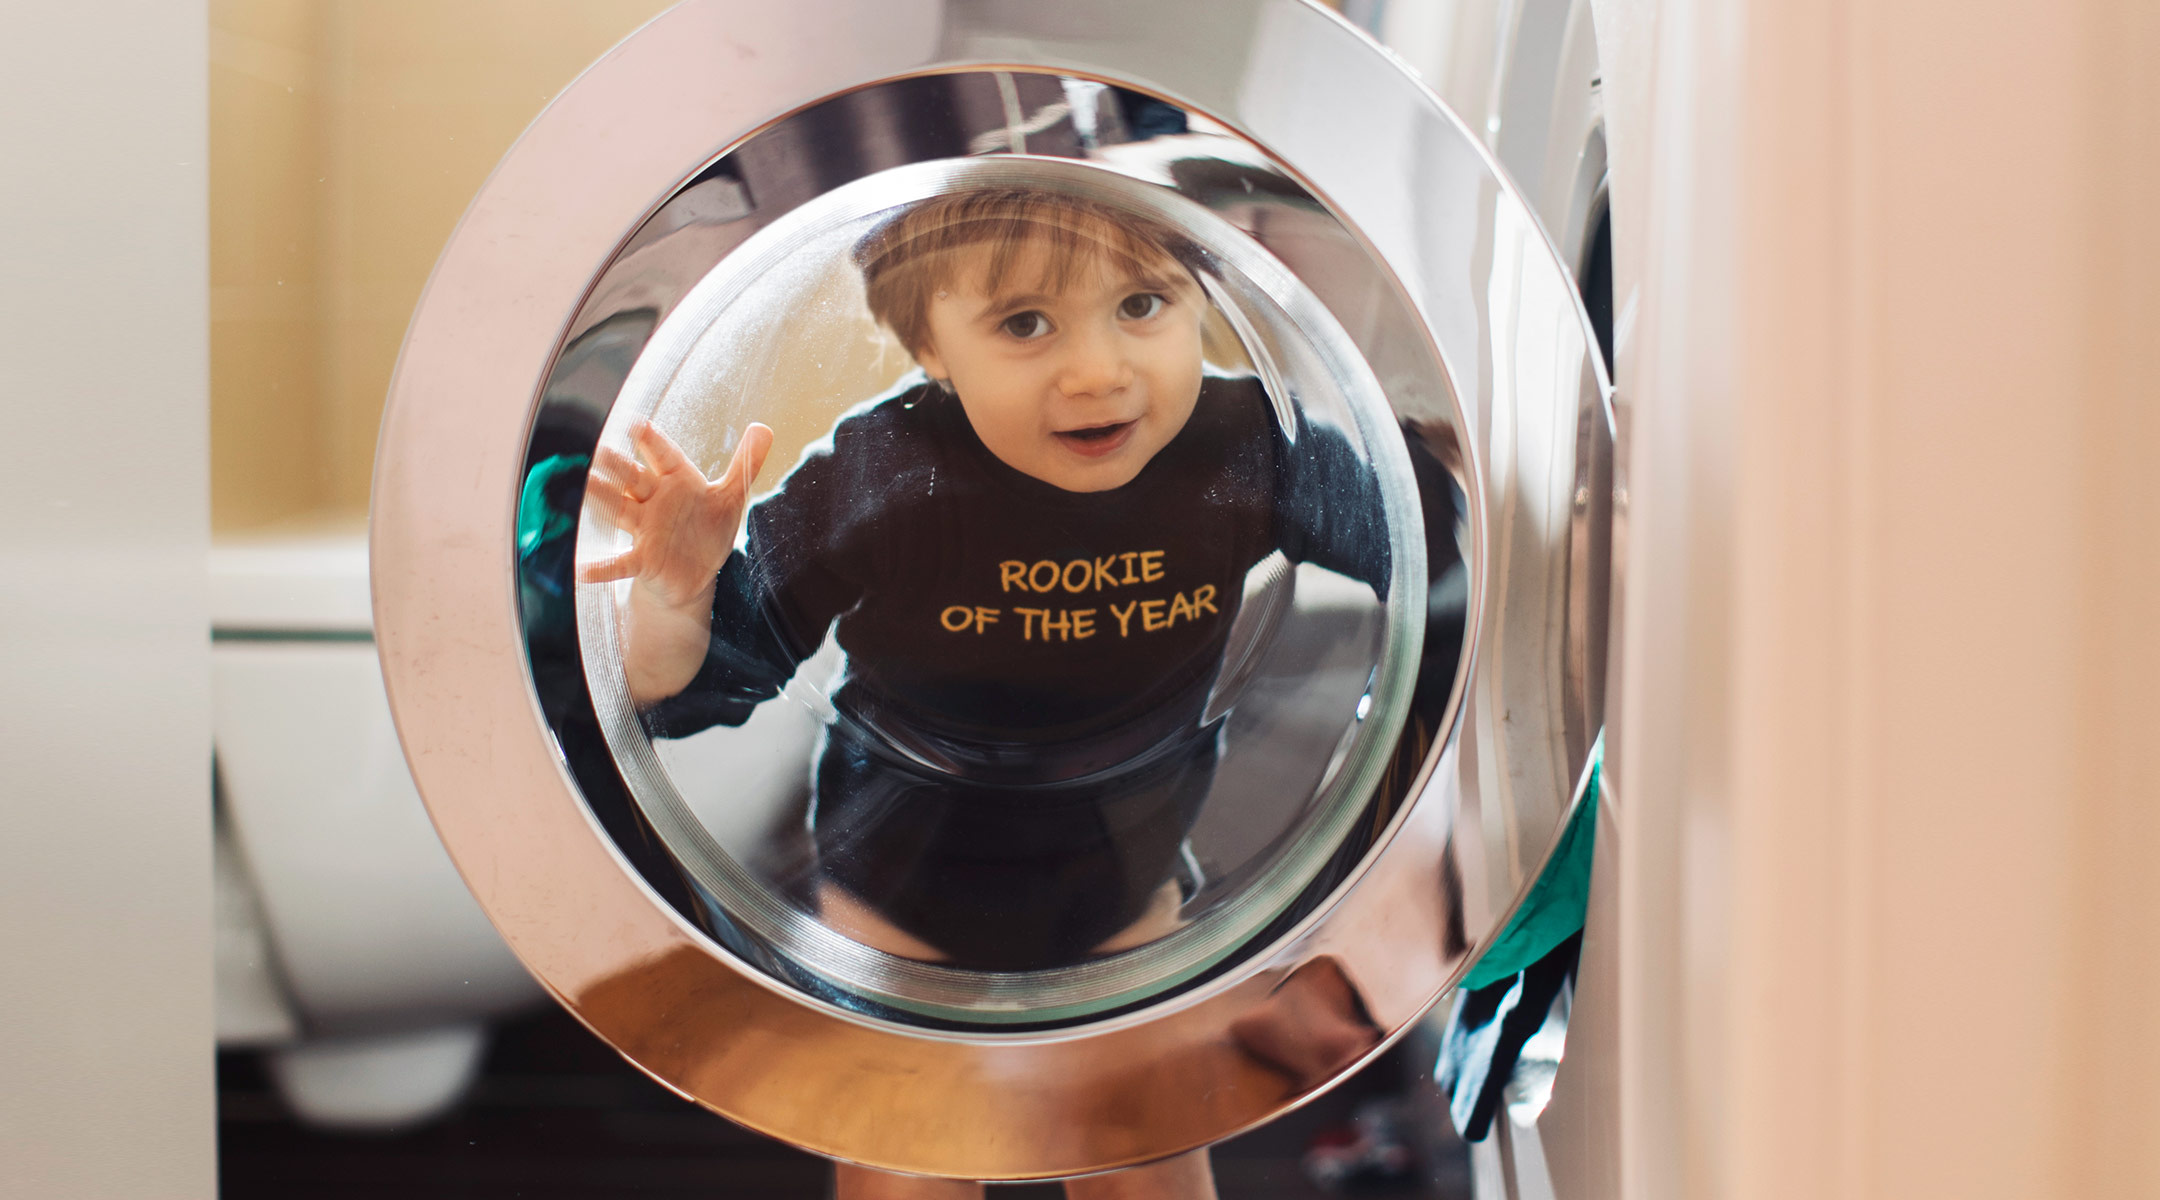 mischievous toddler standing by open dryer